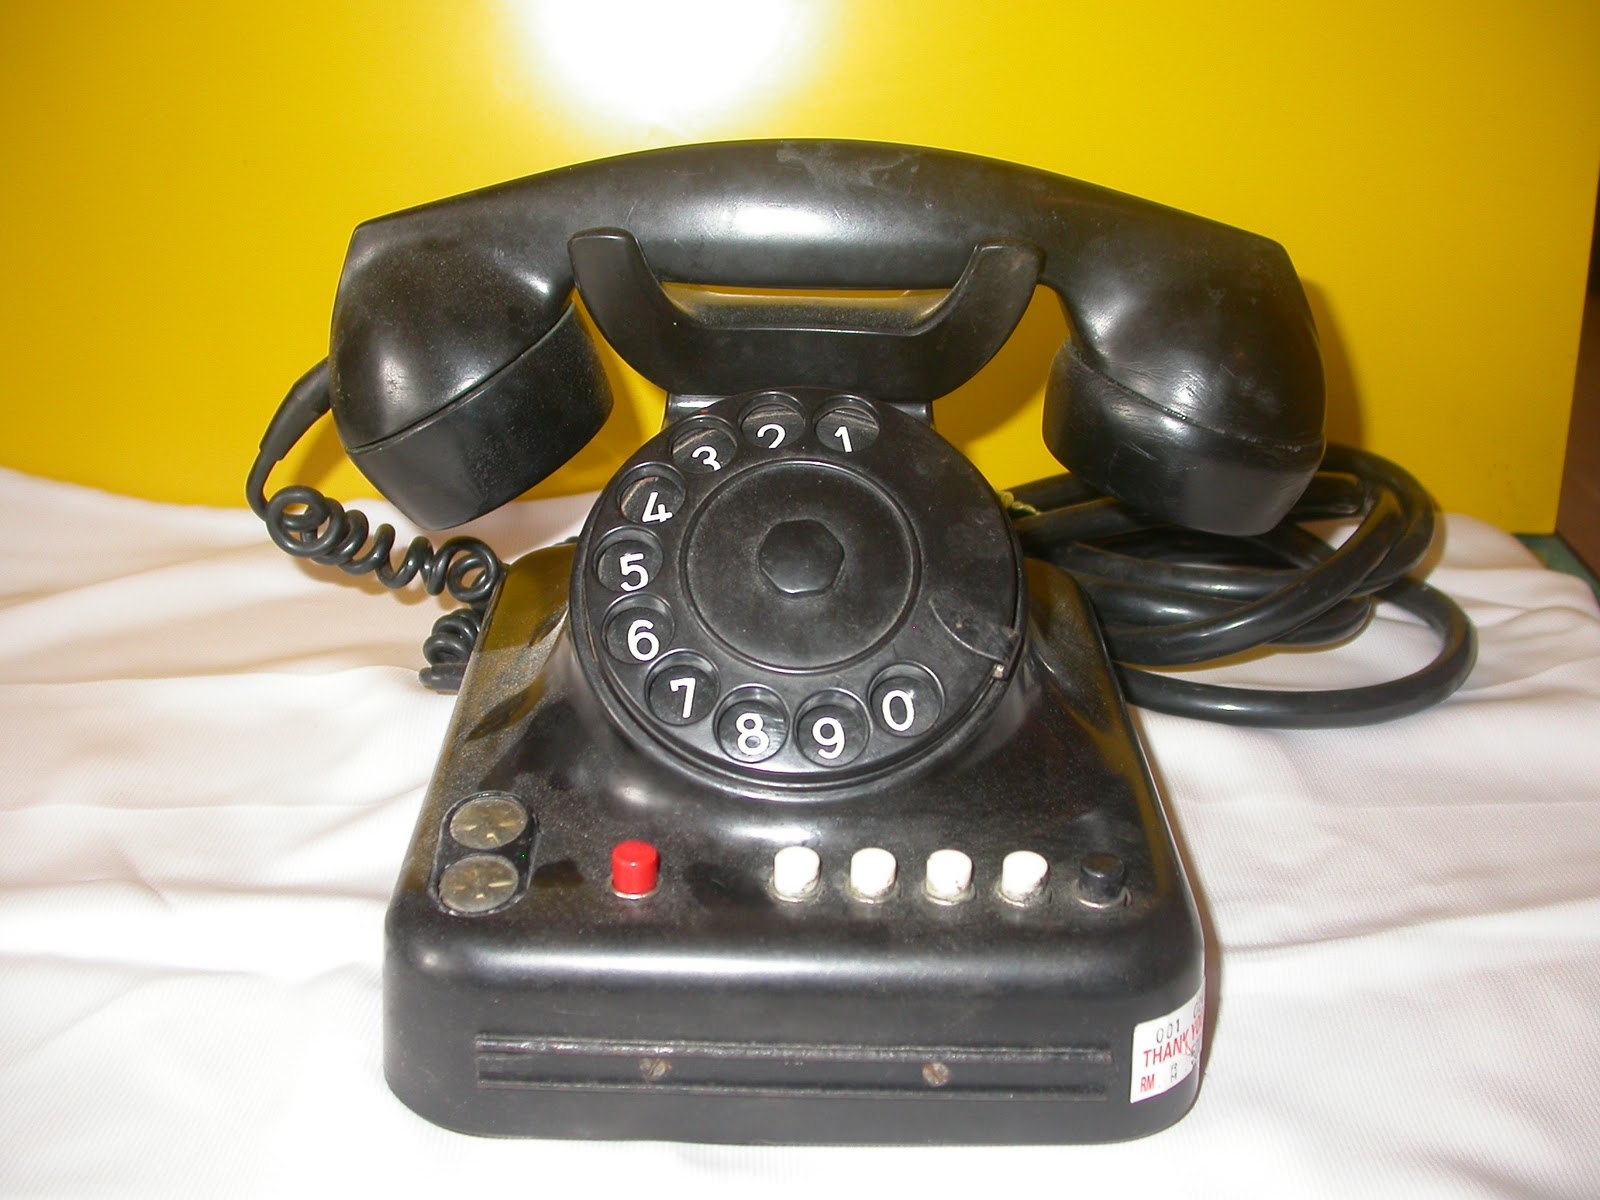 Koleksi Telefon / Collection of Telephone